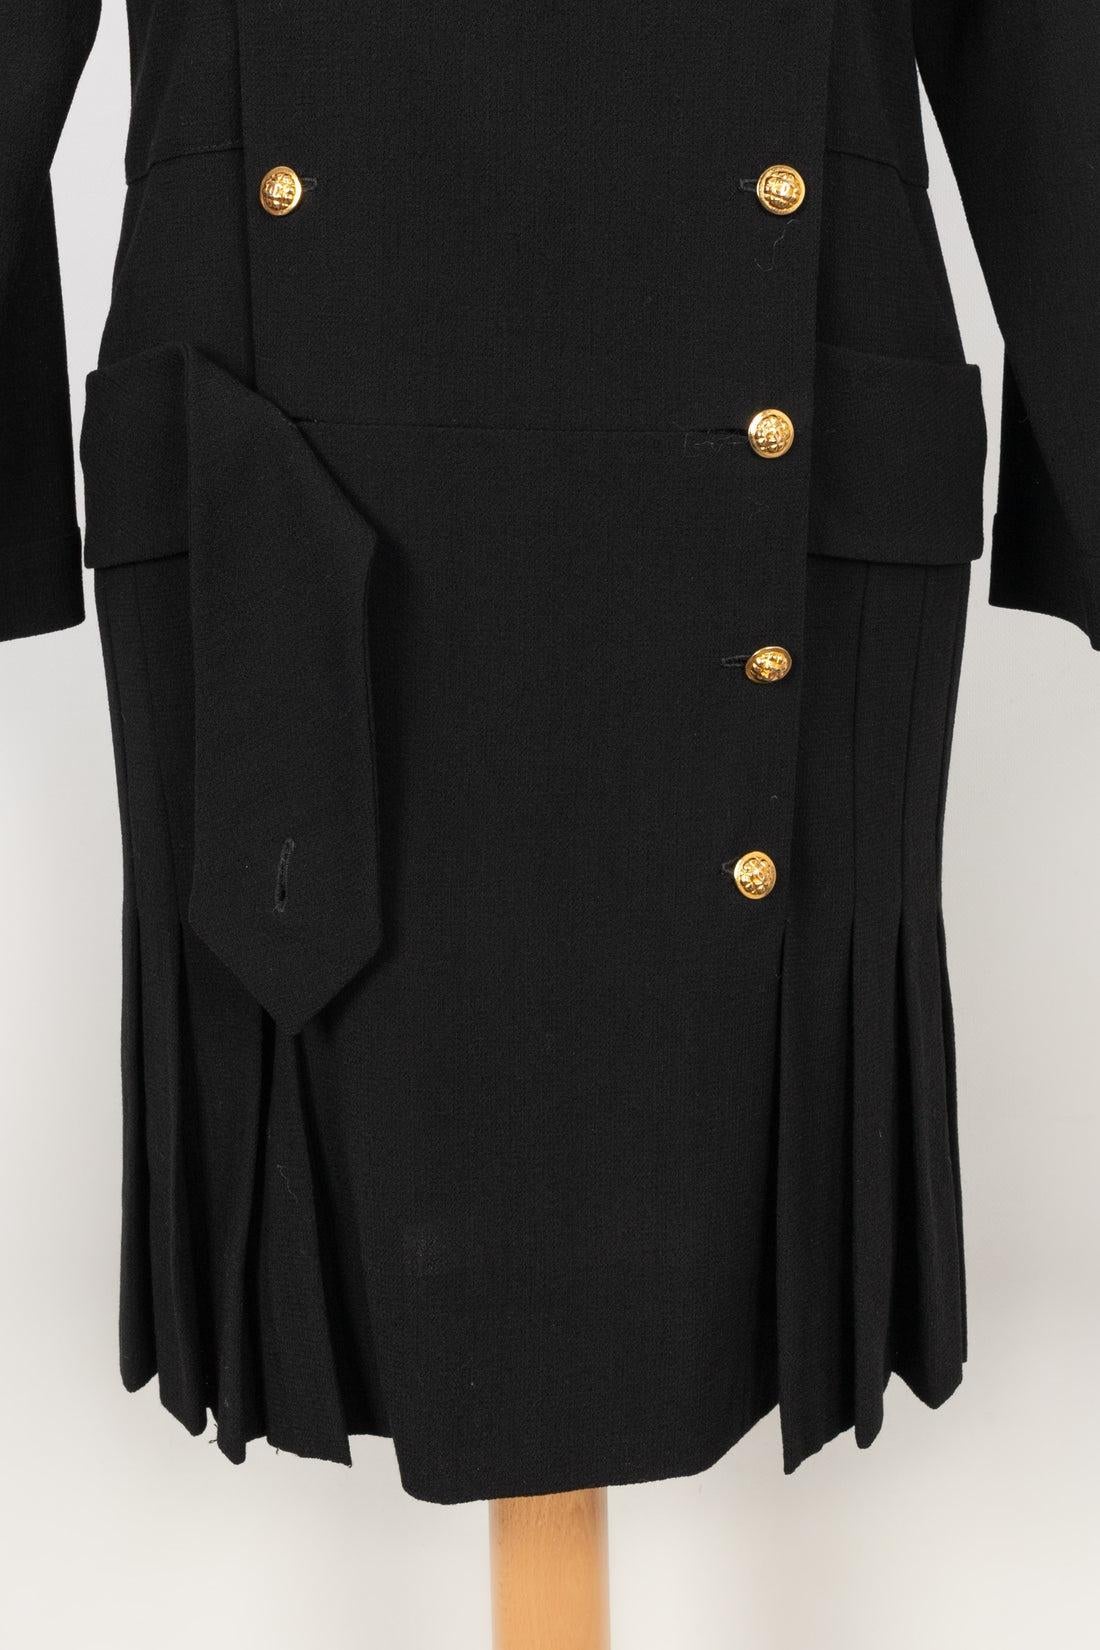 Chanel Long-Sleeved Black Dress, 1980S For Sale 2